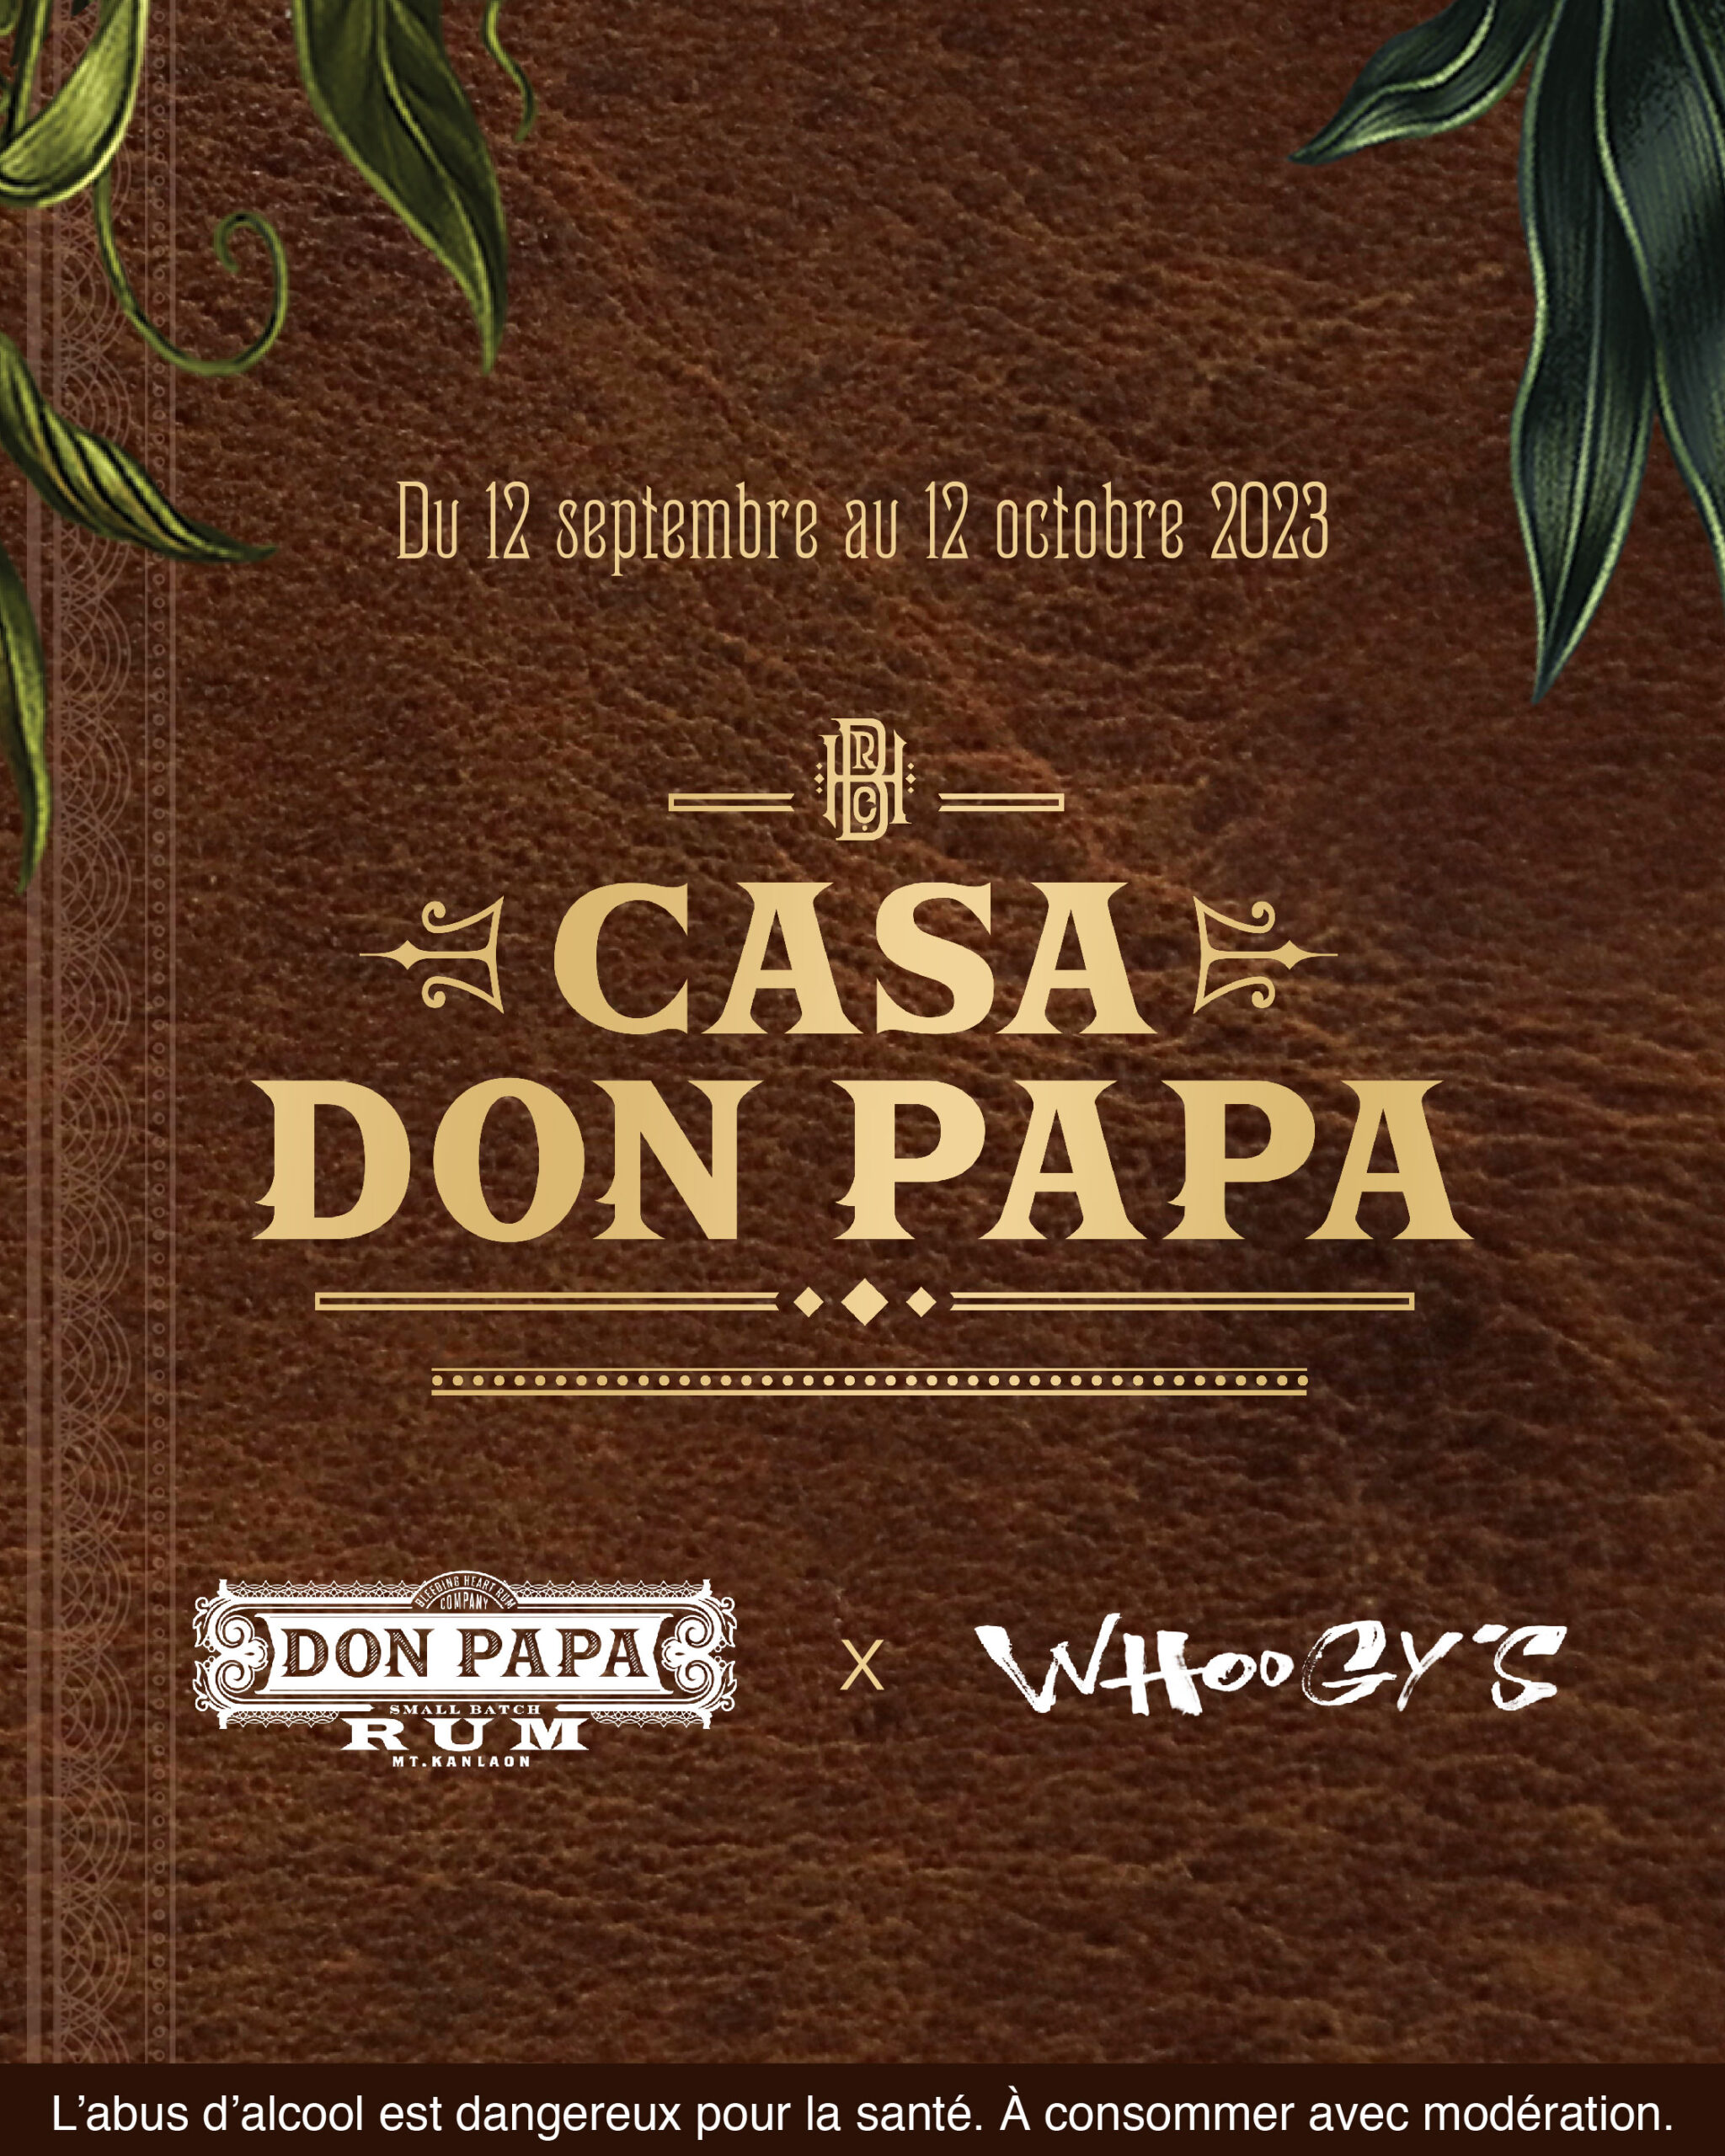 Don Papa Rum France